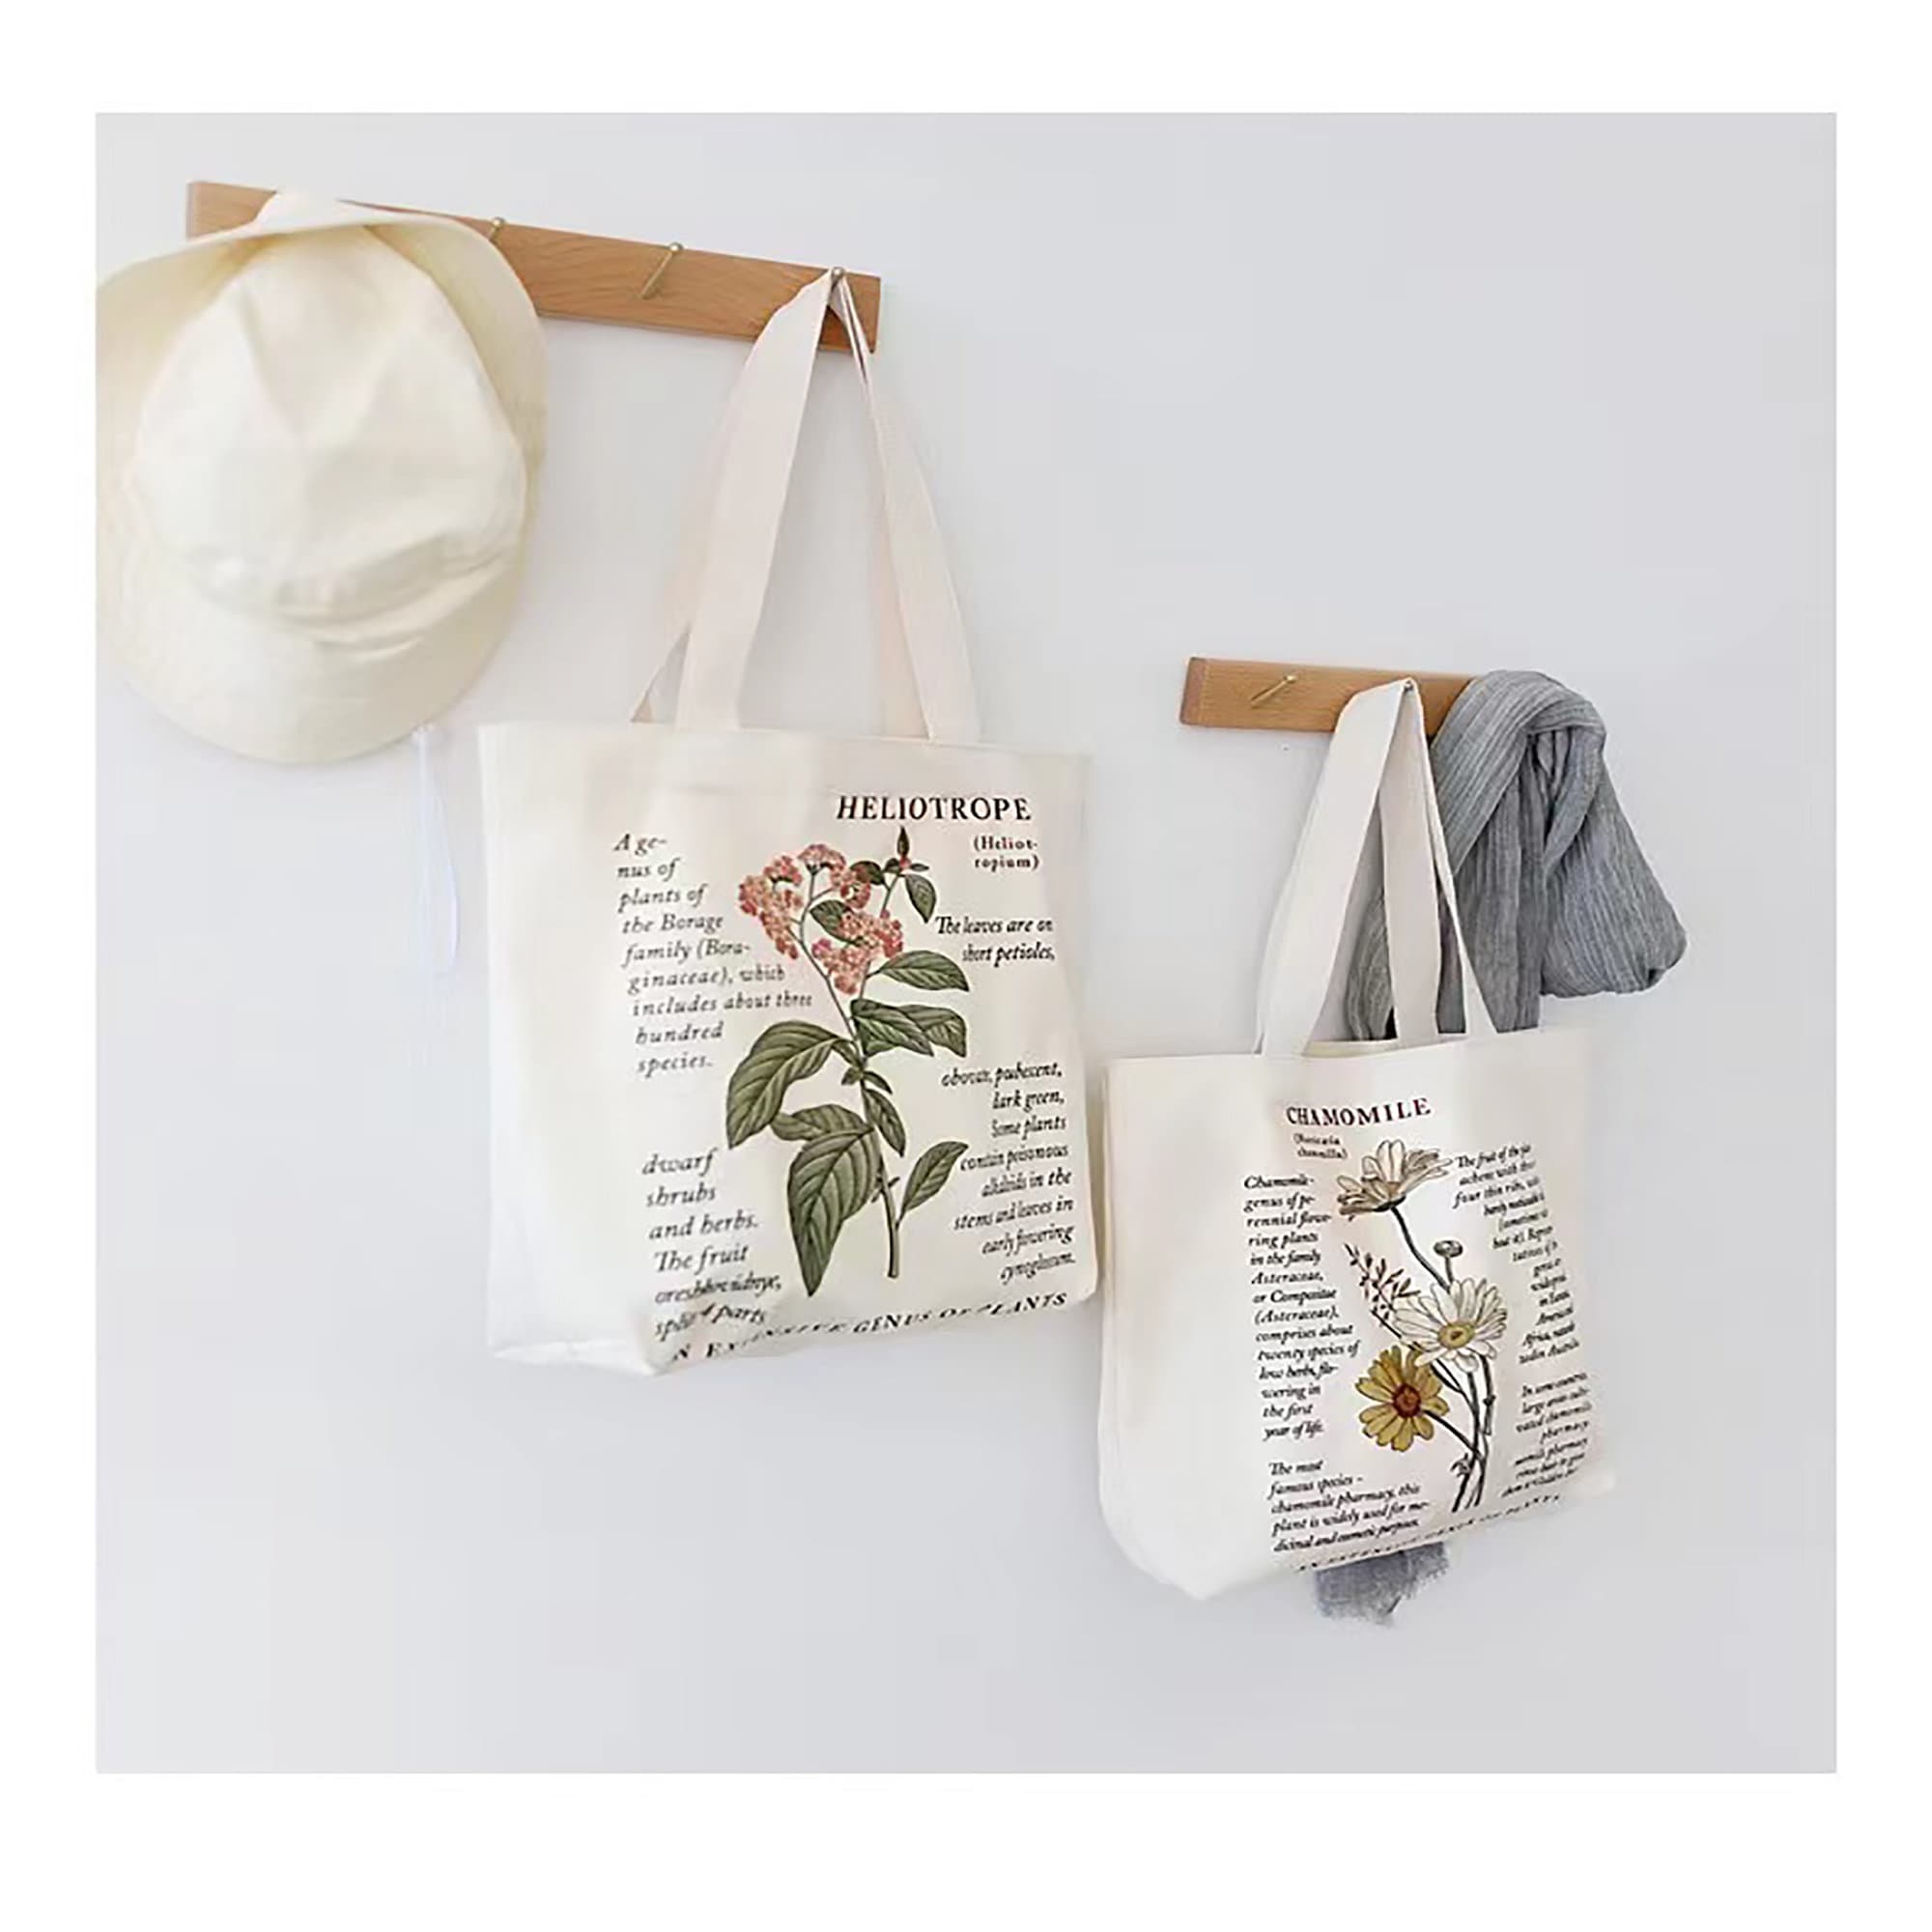 UHEOUN Floral Initial Canvas Tote Bag, Reusable Shopping Bag